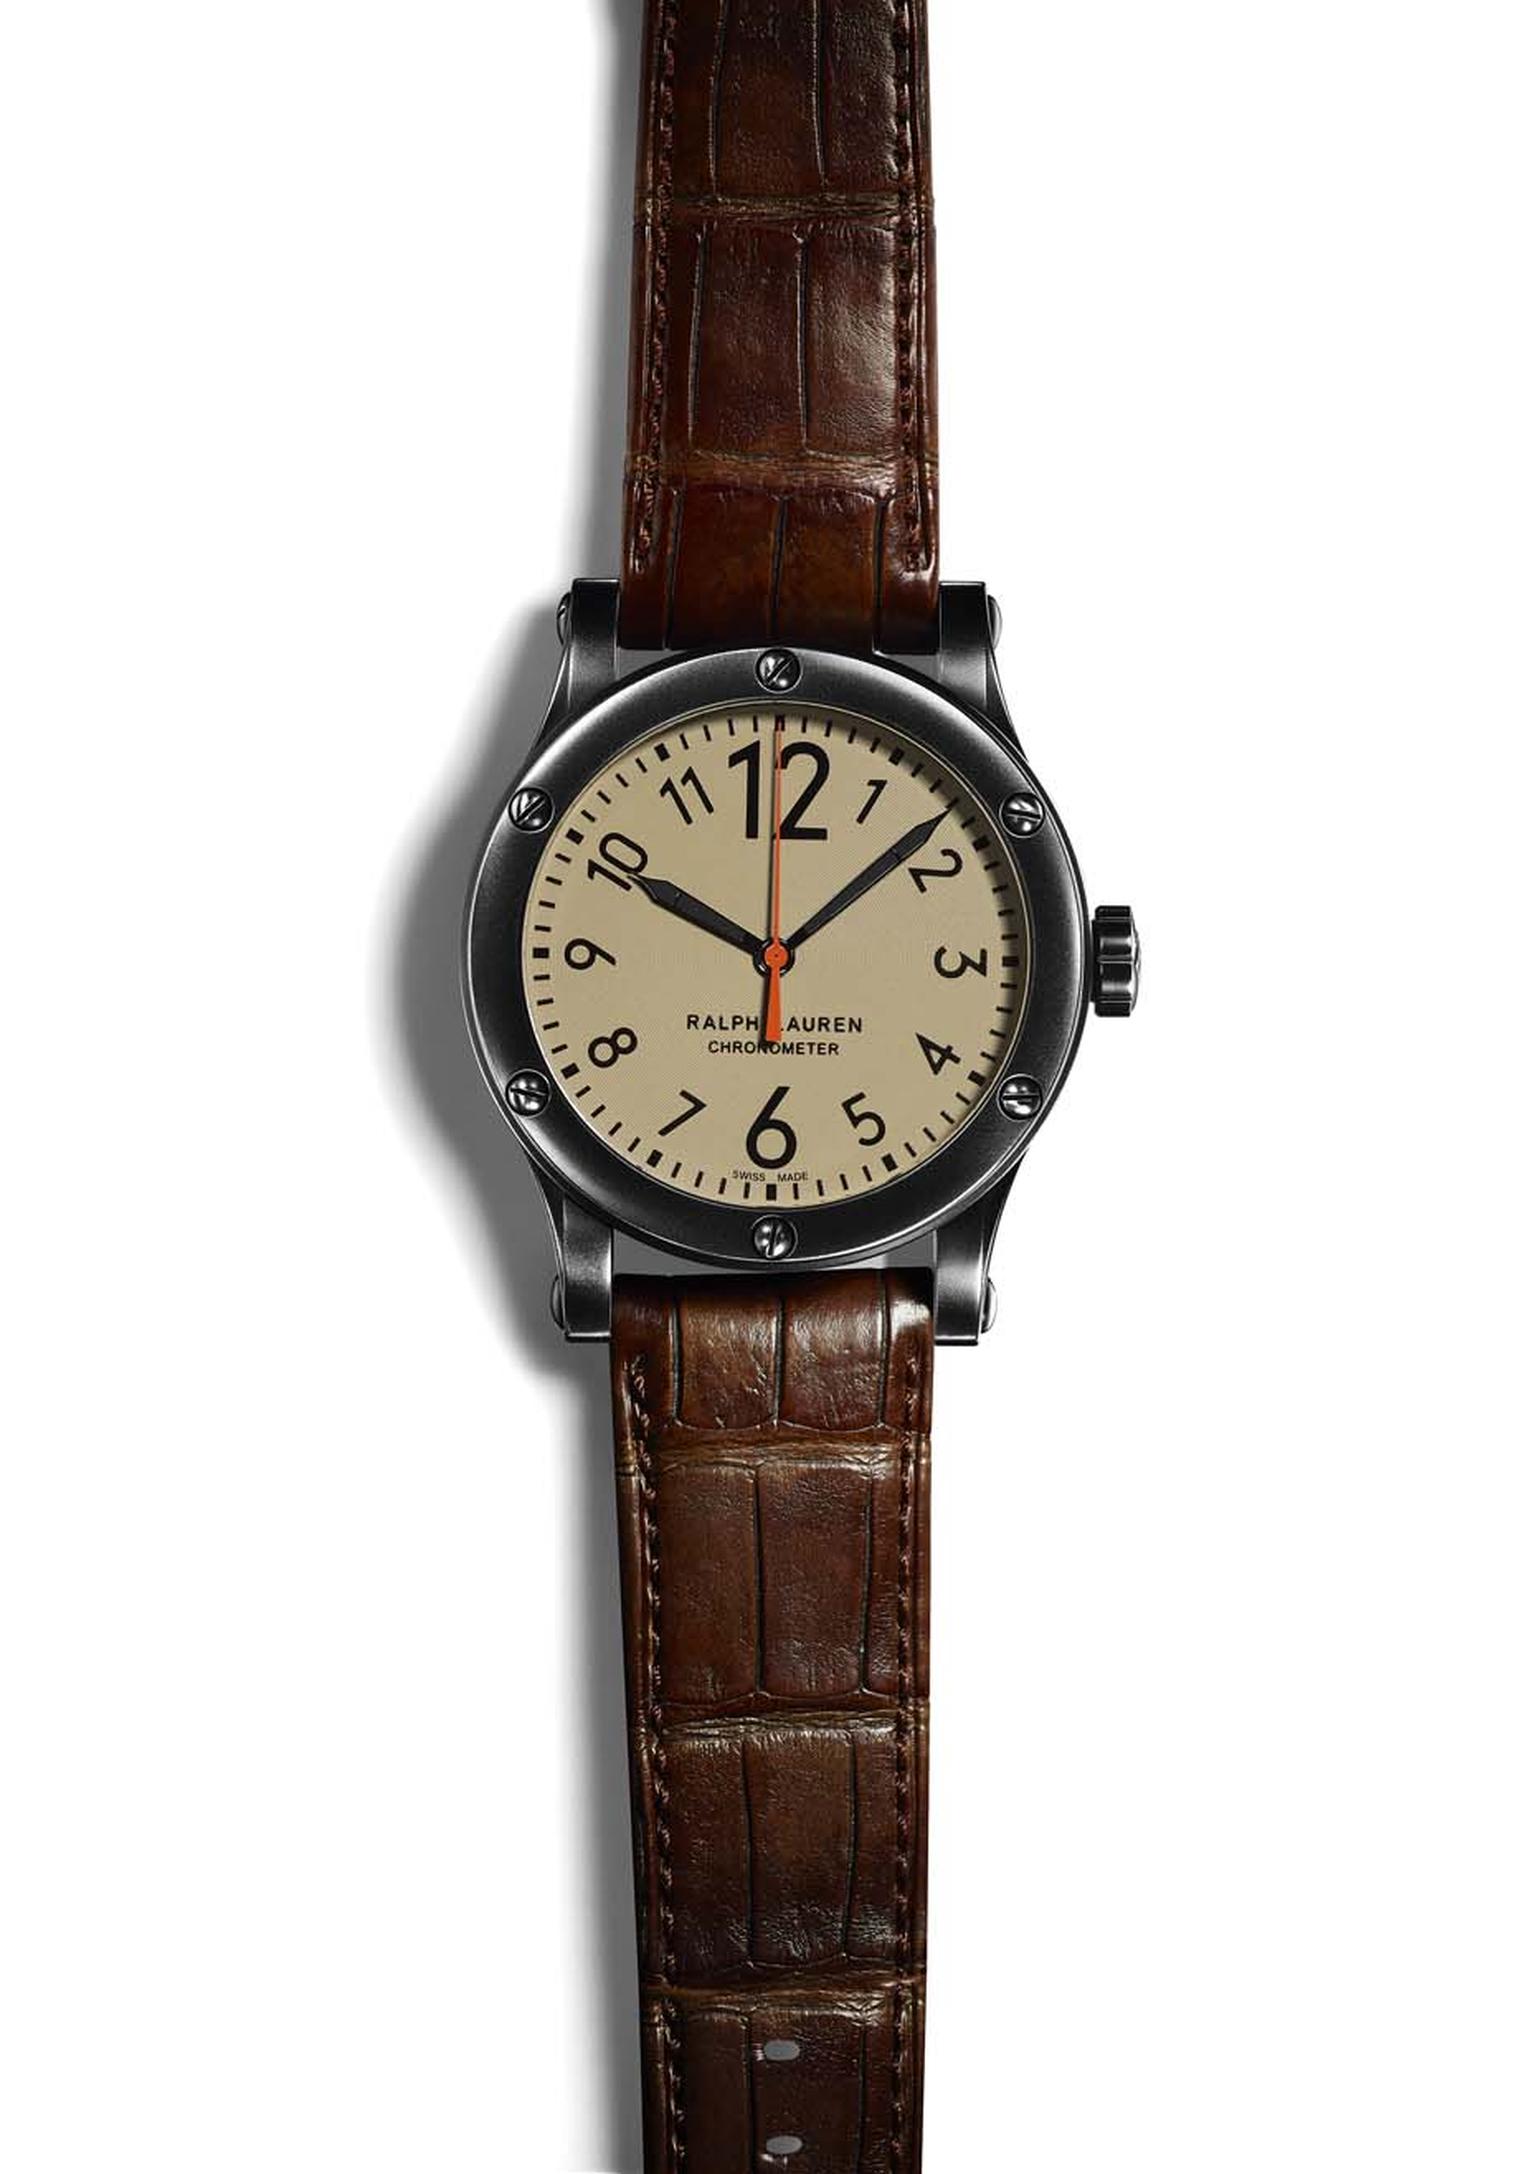 Ralph Lauren_Safari watches_Safari Kaki watch.jpg